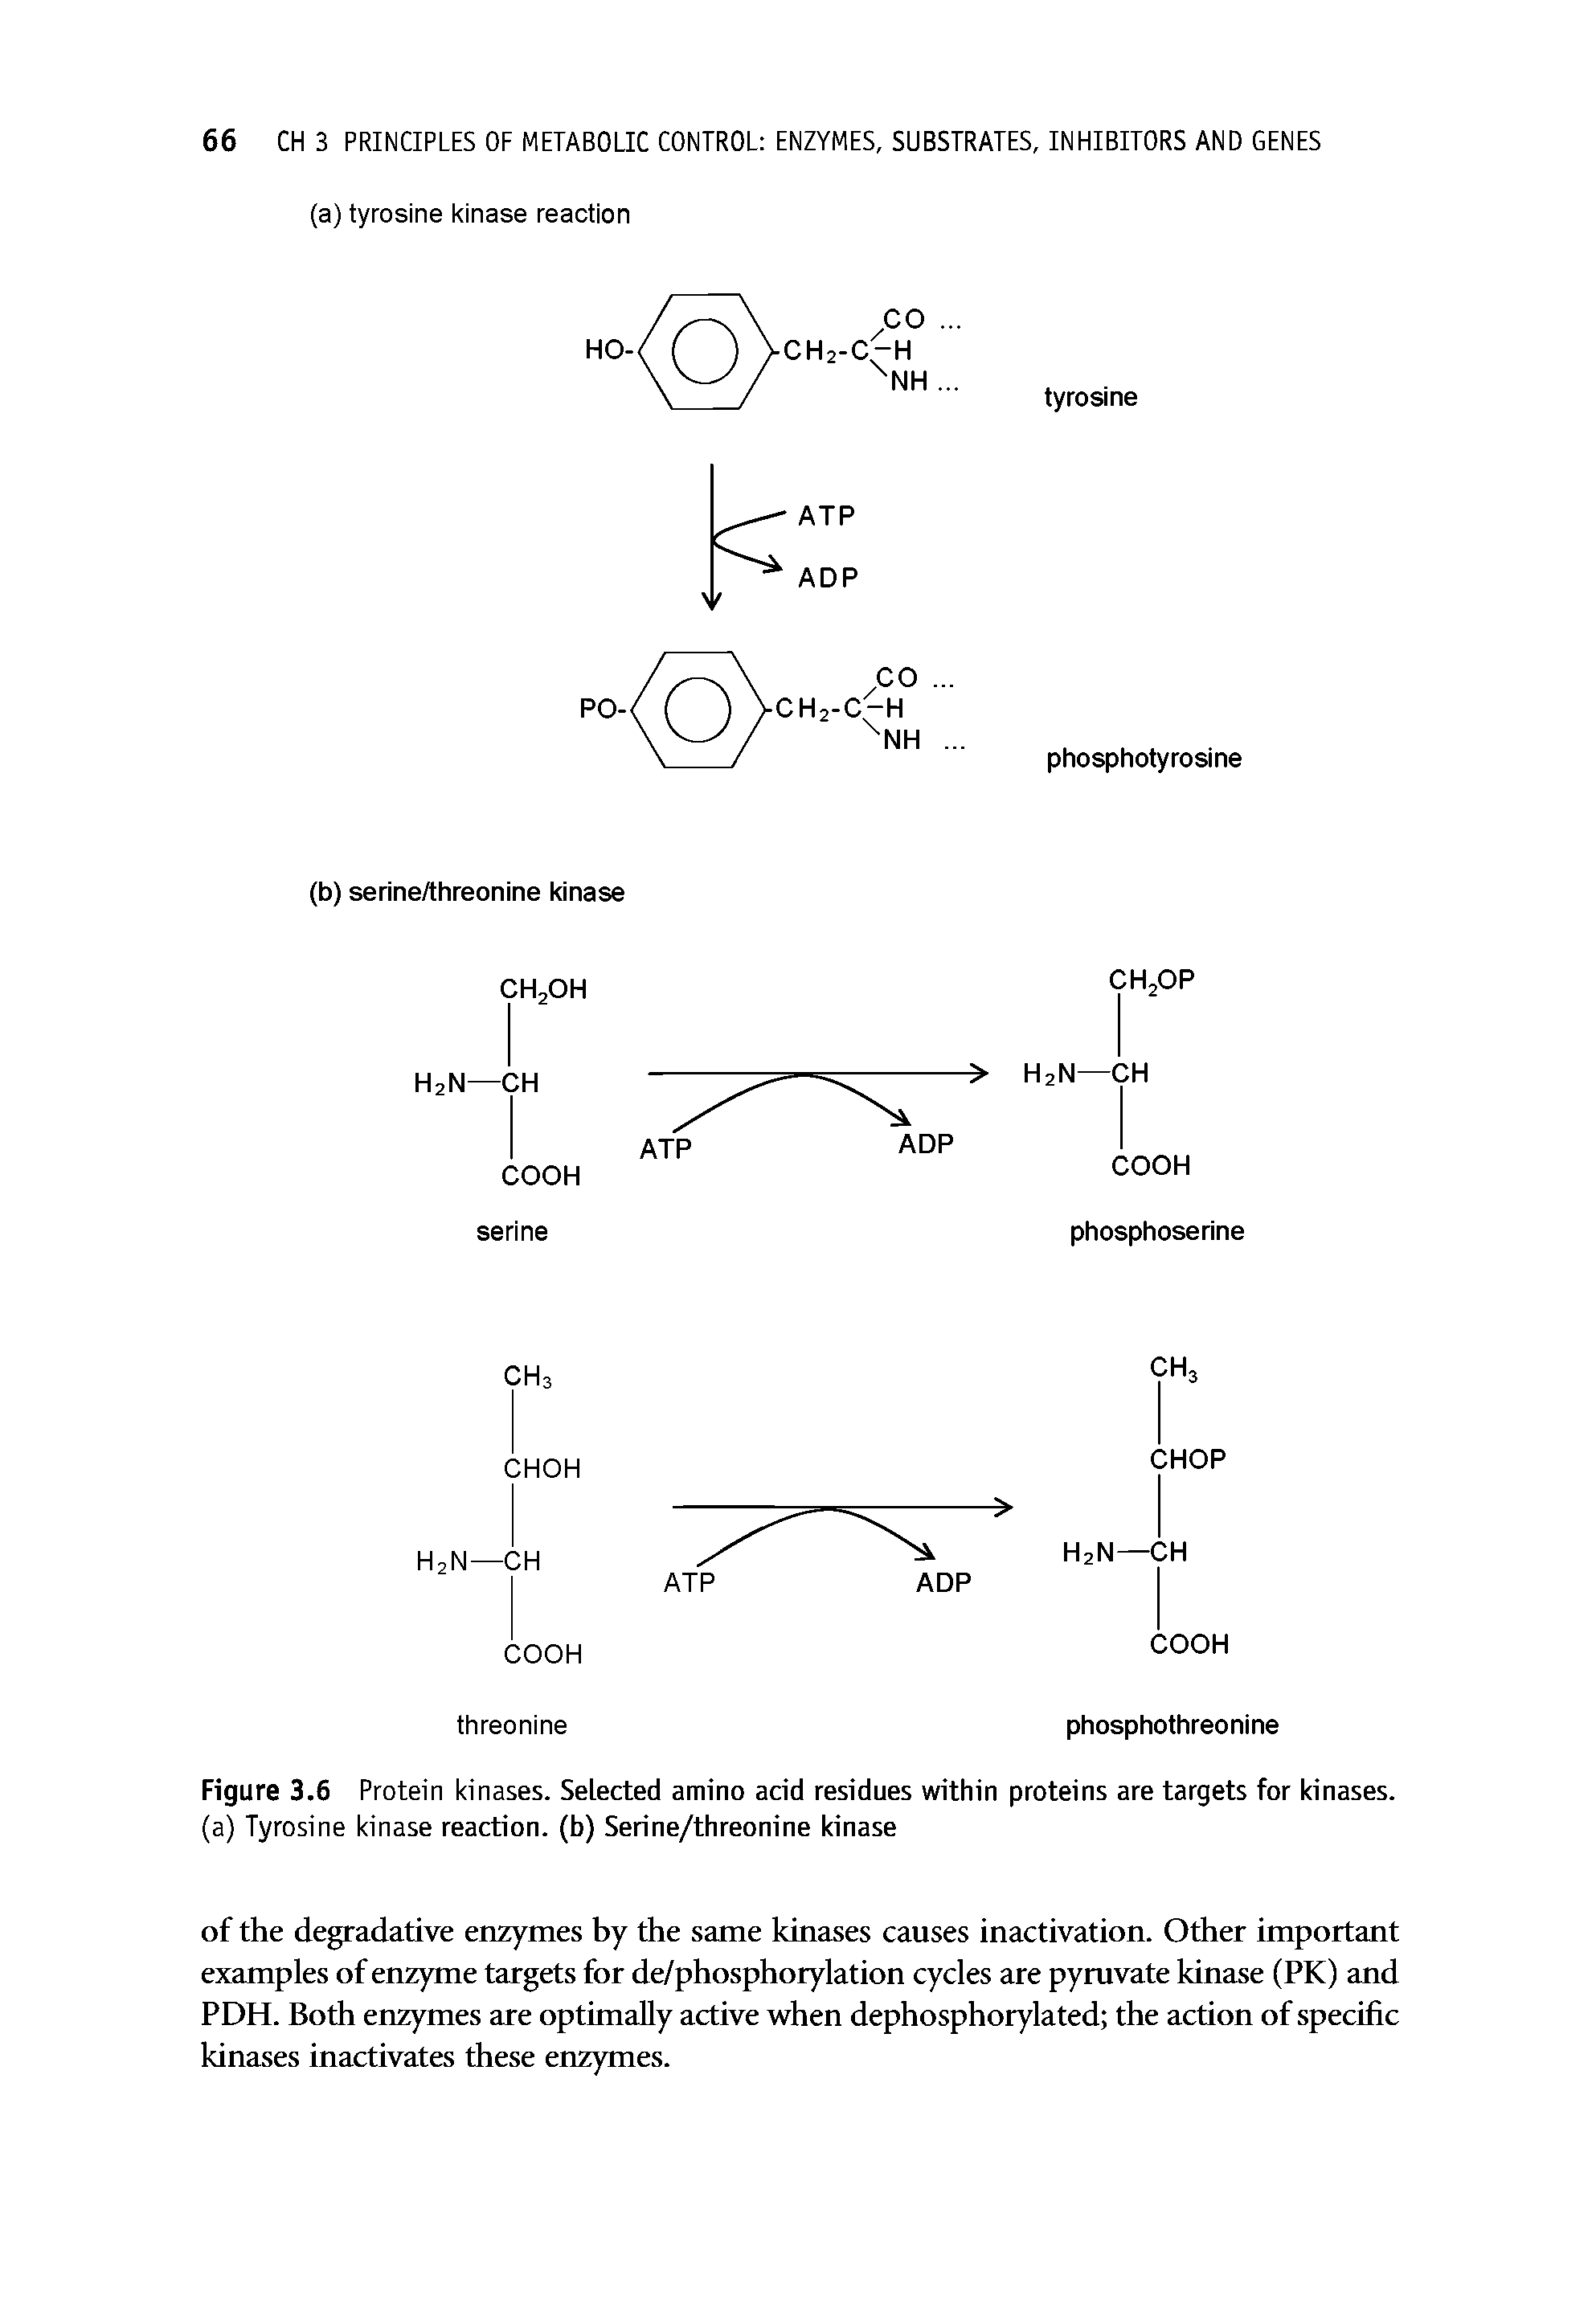 Figure 3.6 Protein kinases. Selected amino acid residues within proteins are targets for kinases, (a) Tyrosine kinase reaction, (b) Serine/threonine kinase...